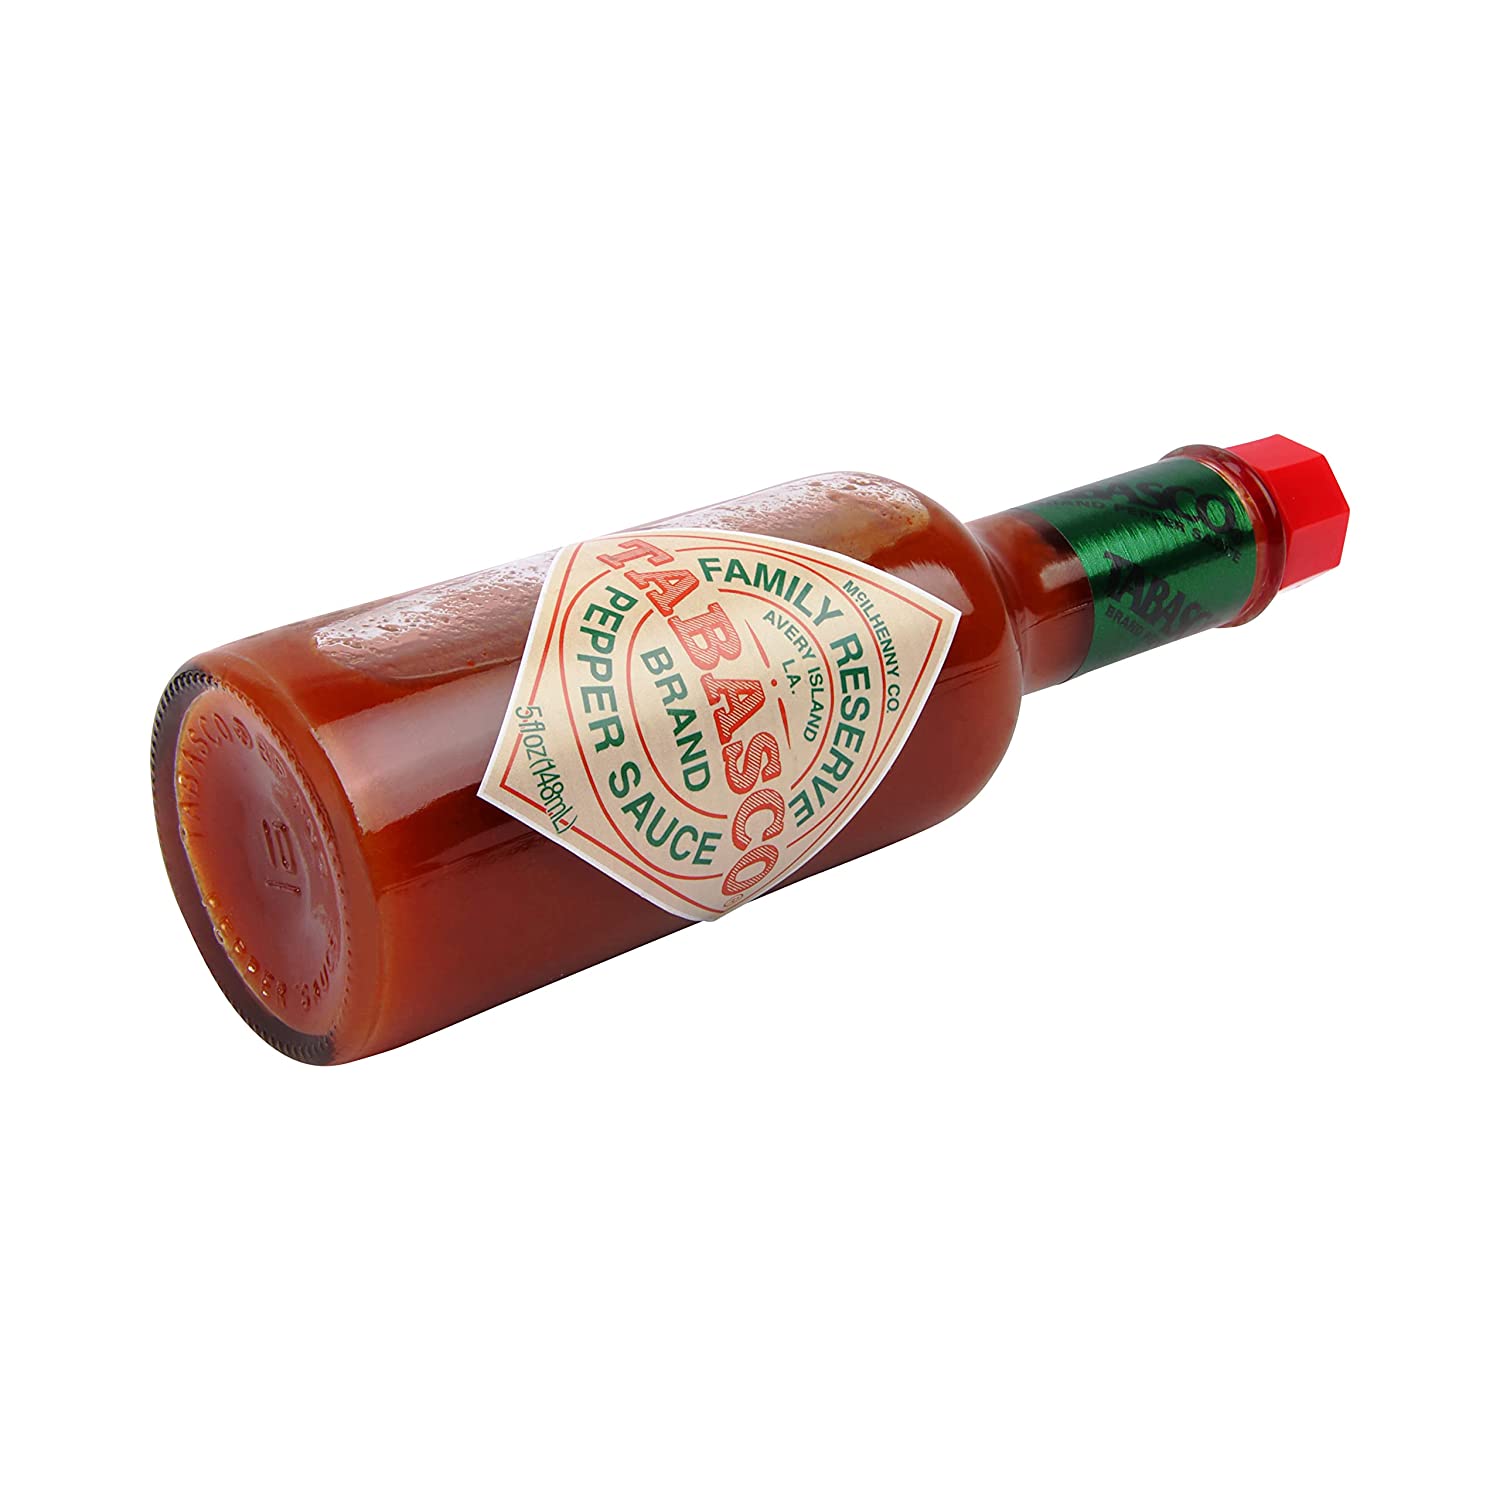 TABASCO® Scorpion Sauce + Habanero Sauce (2 x 148 ml) 